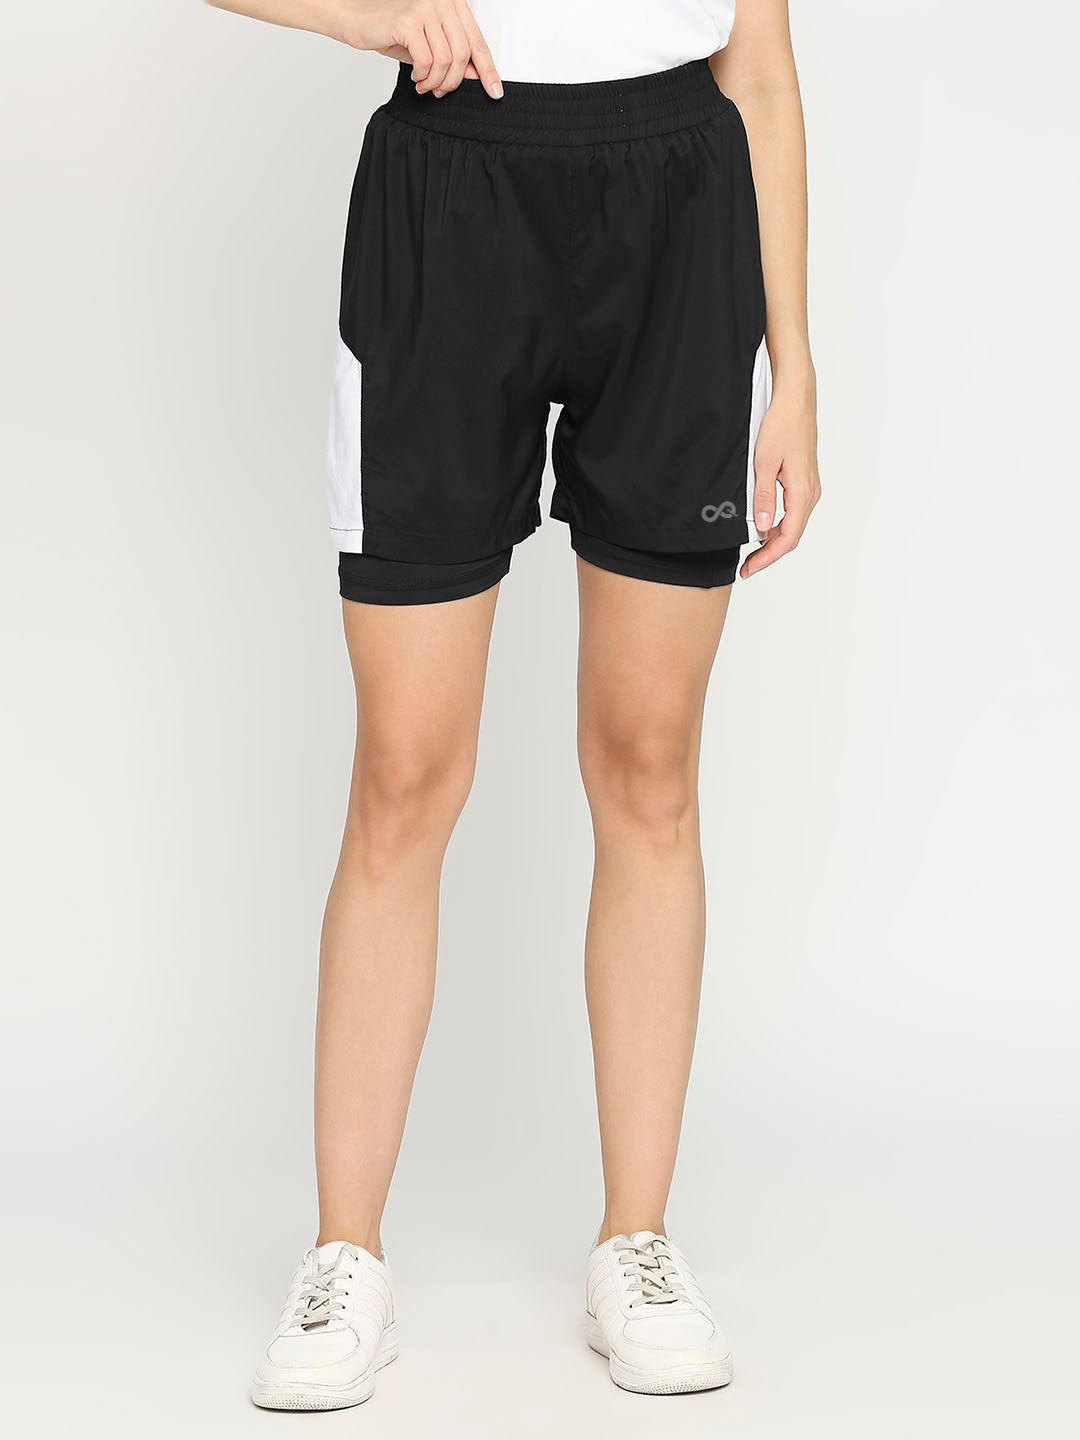 Women's Activewear Shorts - Black & White